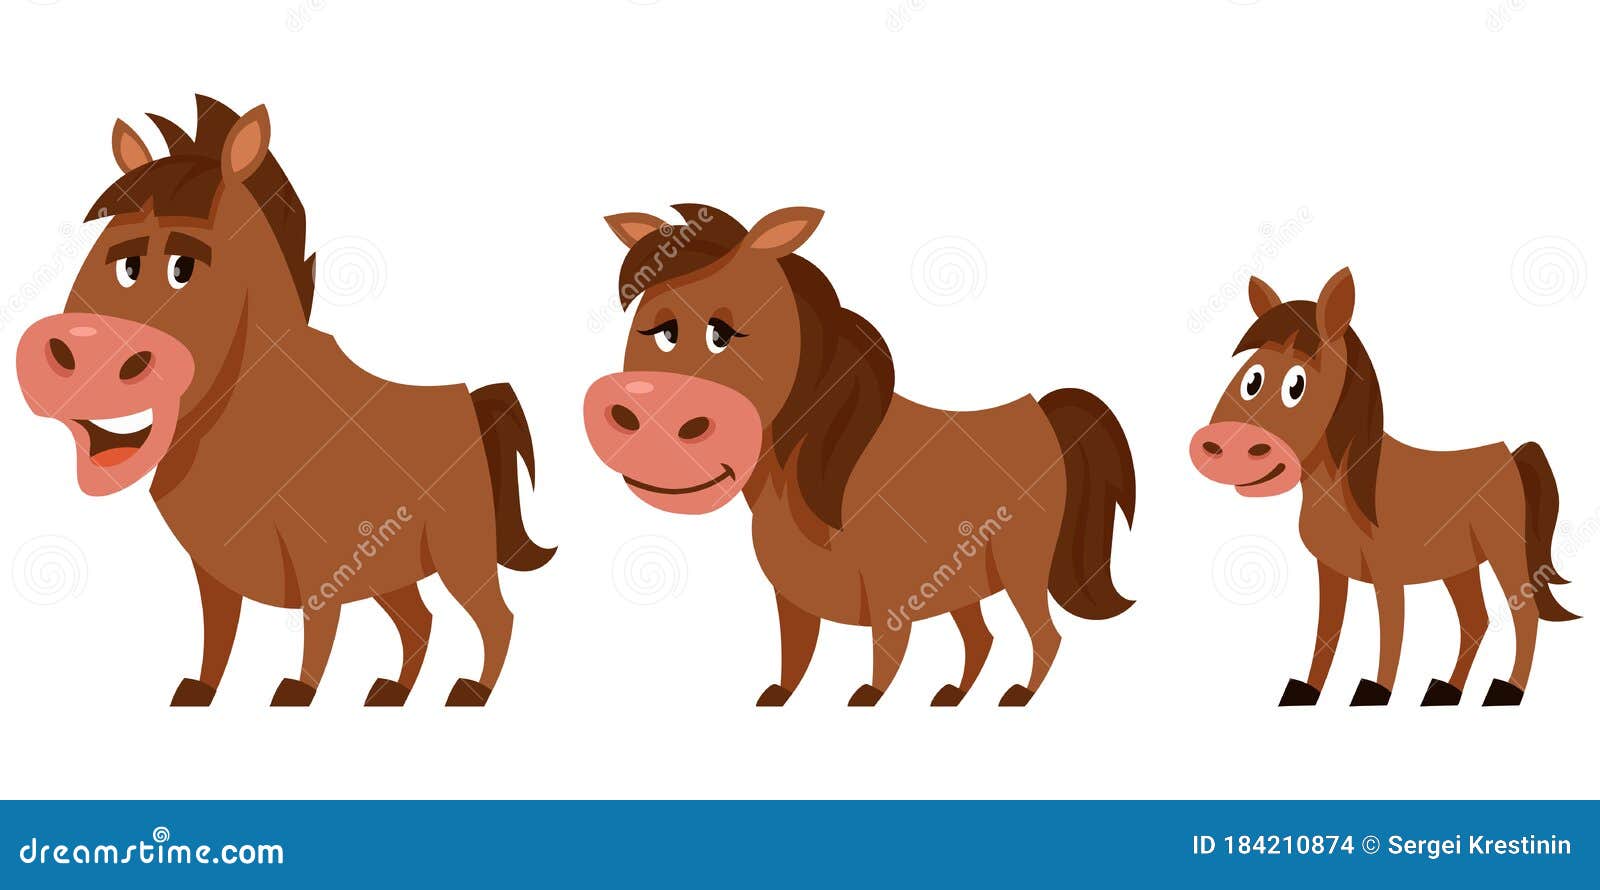 Horse sex cartoon